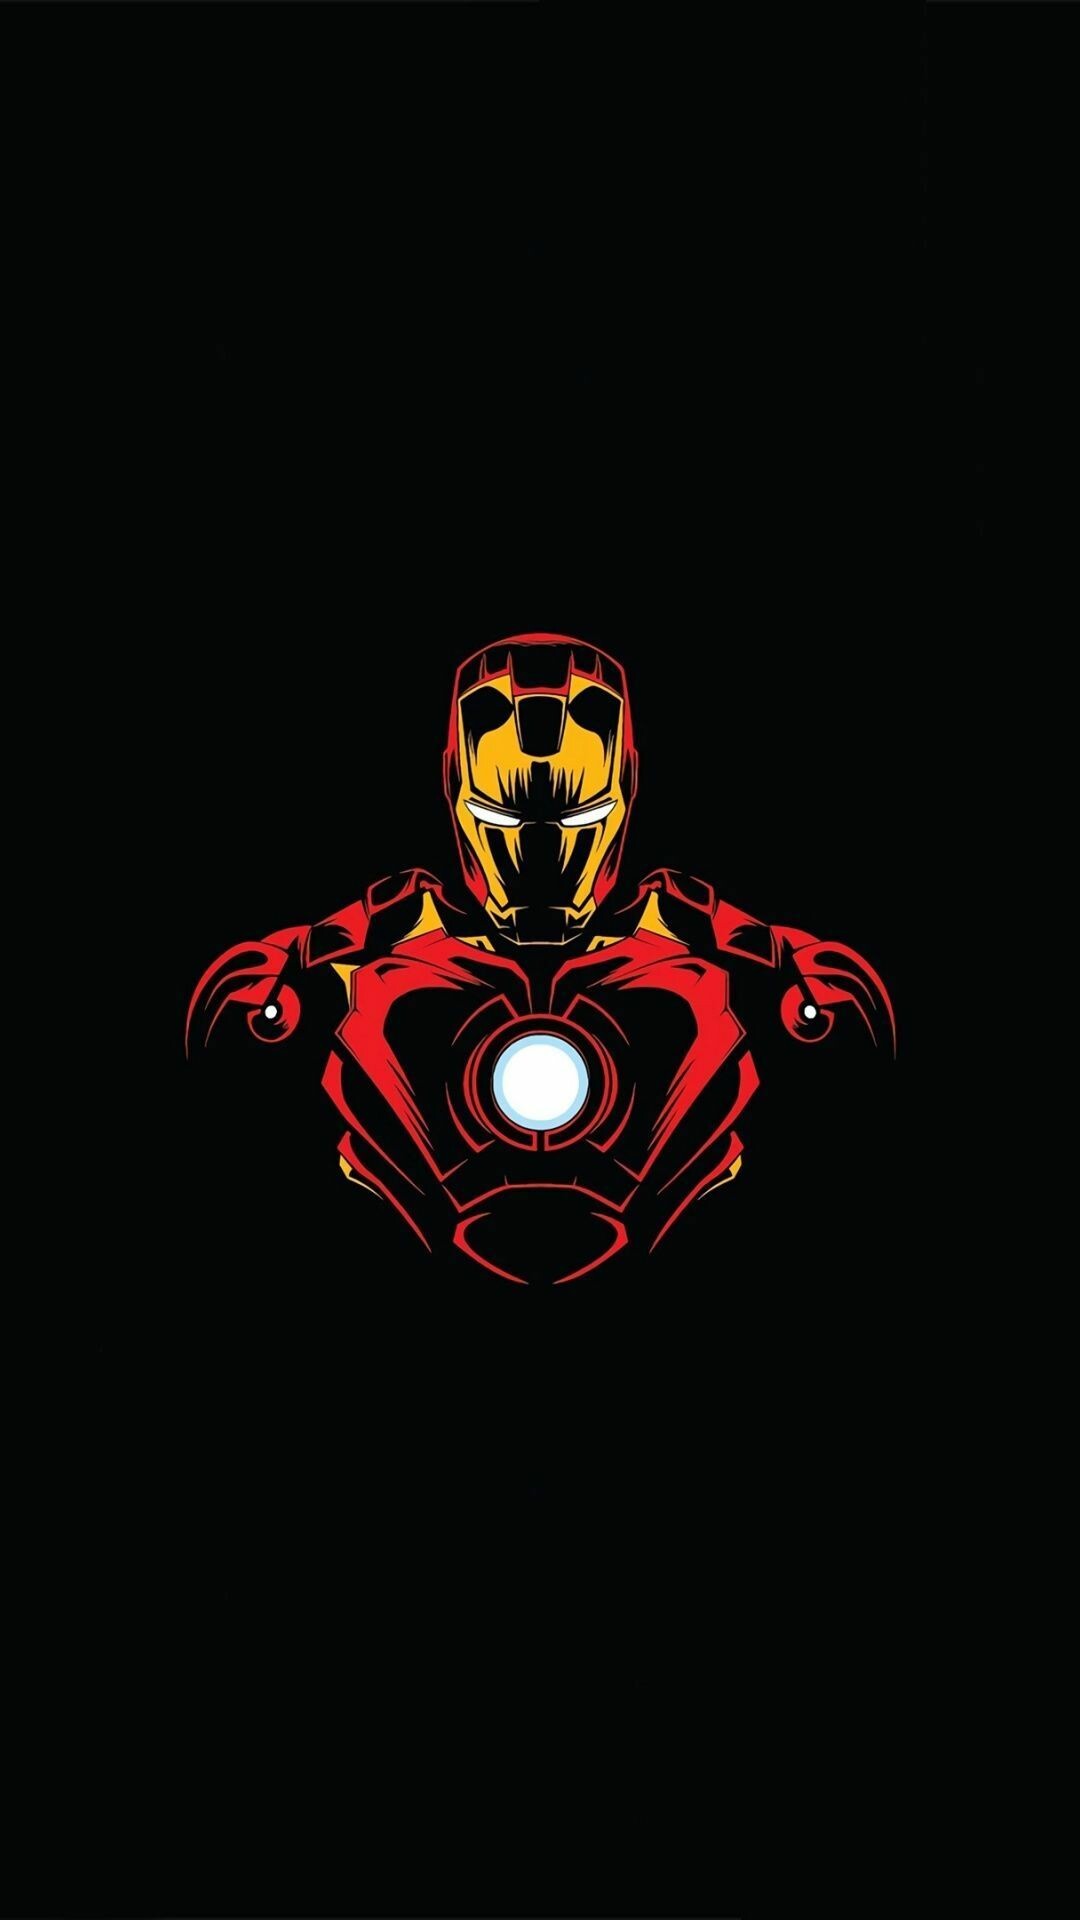 Marvel Heroes: Iron Man, Tony Stark, A billionaire industrialist, a founding member of the Avengers, Minimalistic. 1080x1920 Full HD Wallpaper.